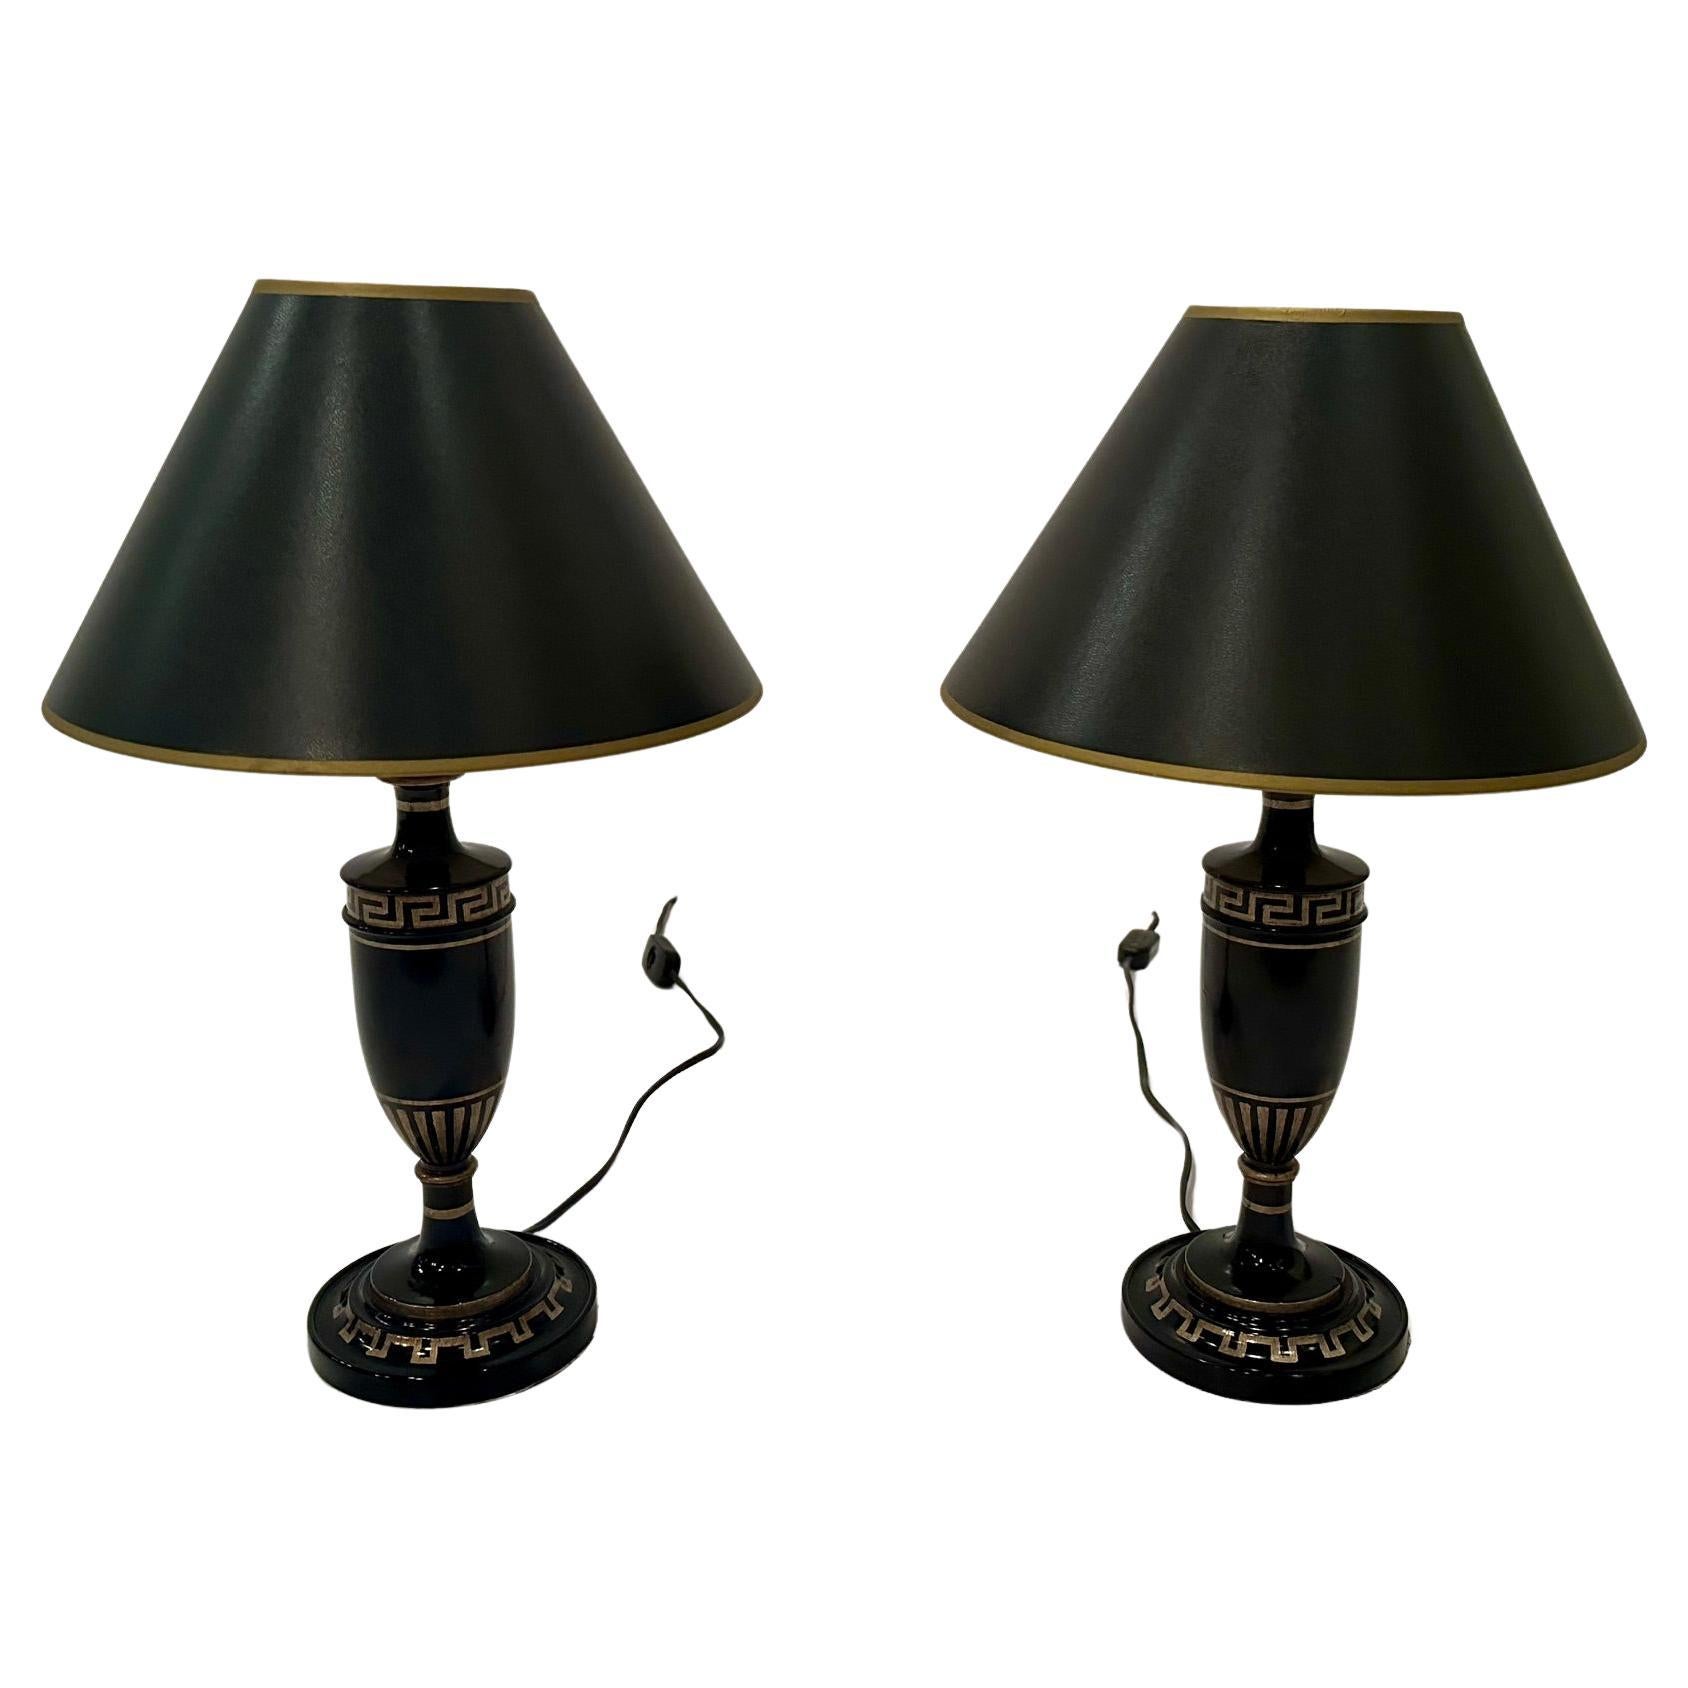 Glamorous black and gold ebonized wood table lamps having gold Greek key decoration and black lampshades.  Bases are 5